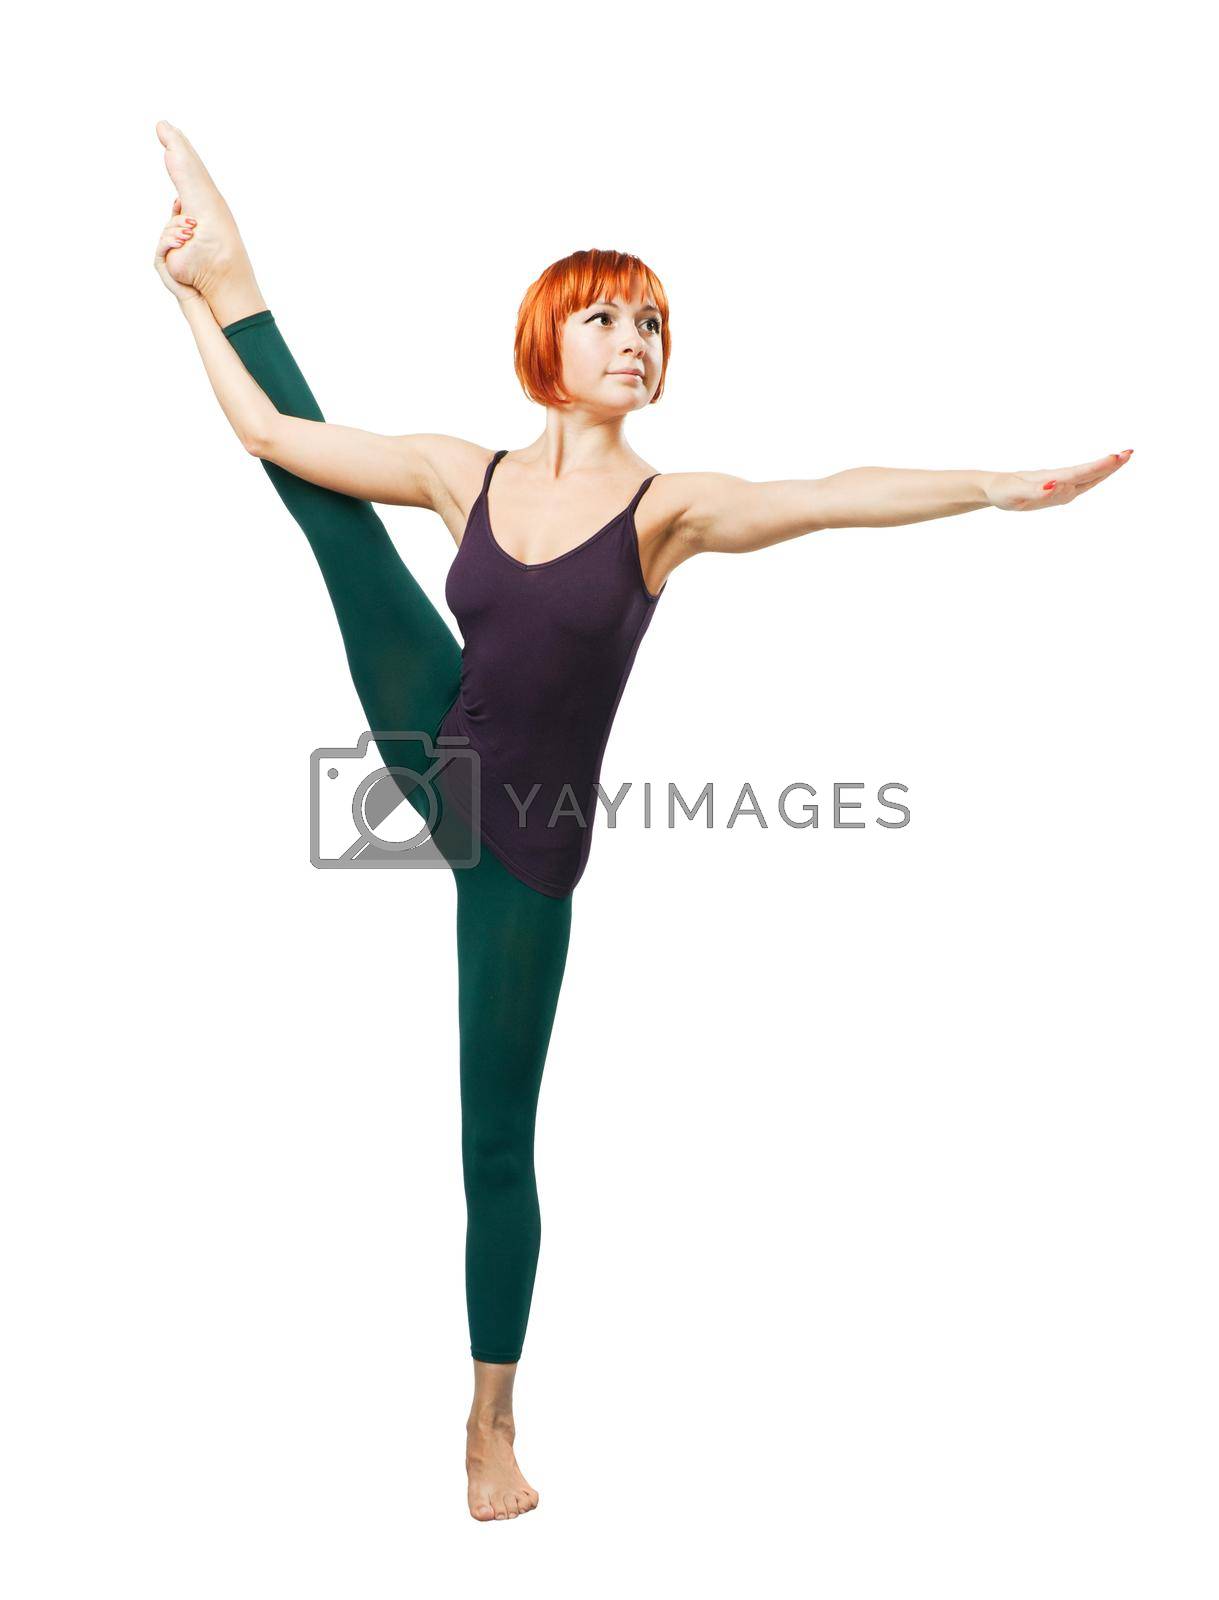 Slim beautiful woman practicing yoga asana standing on one leg